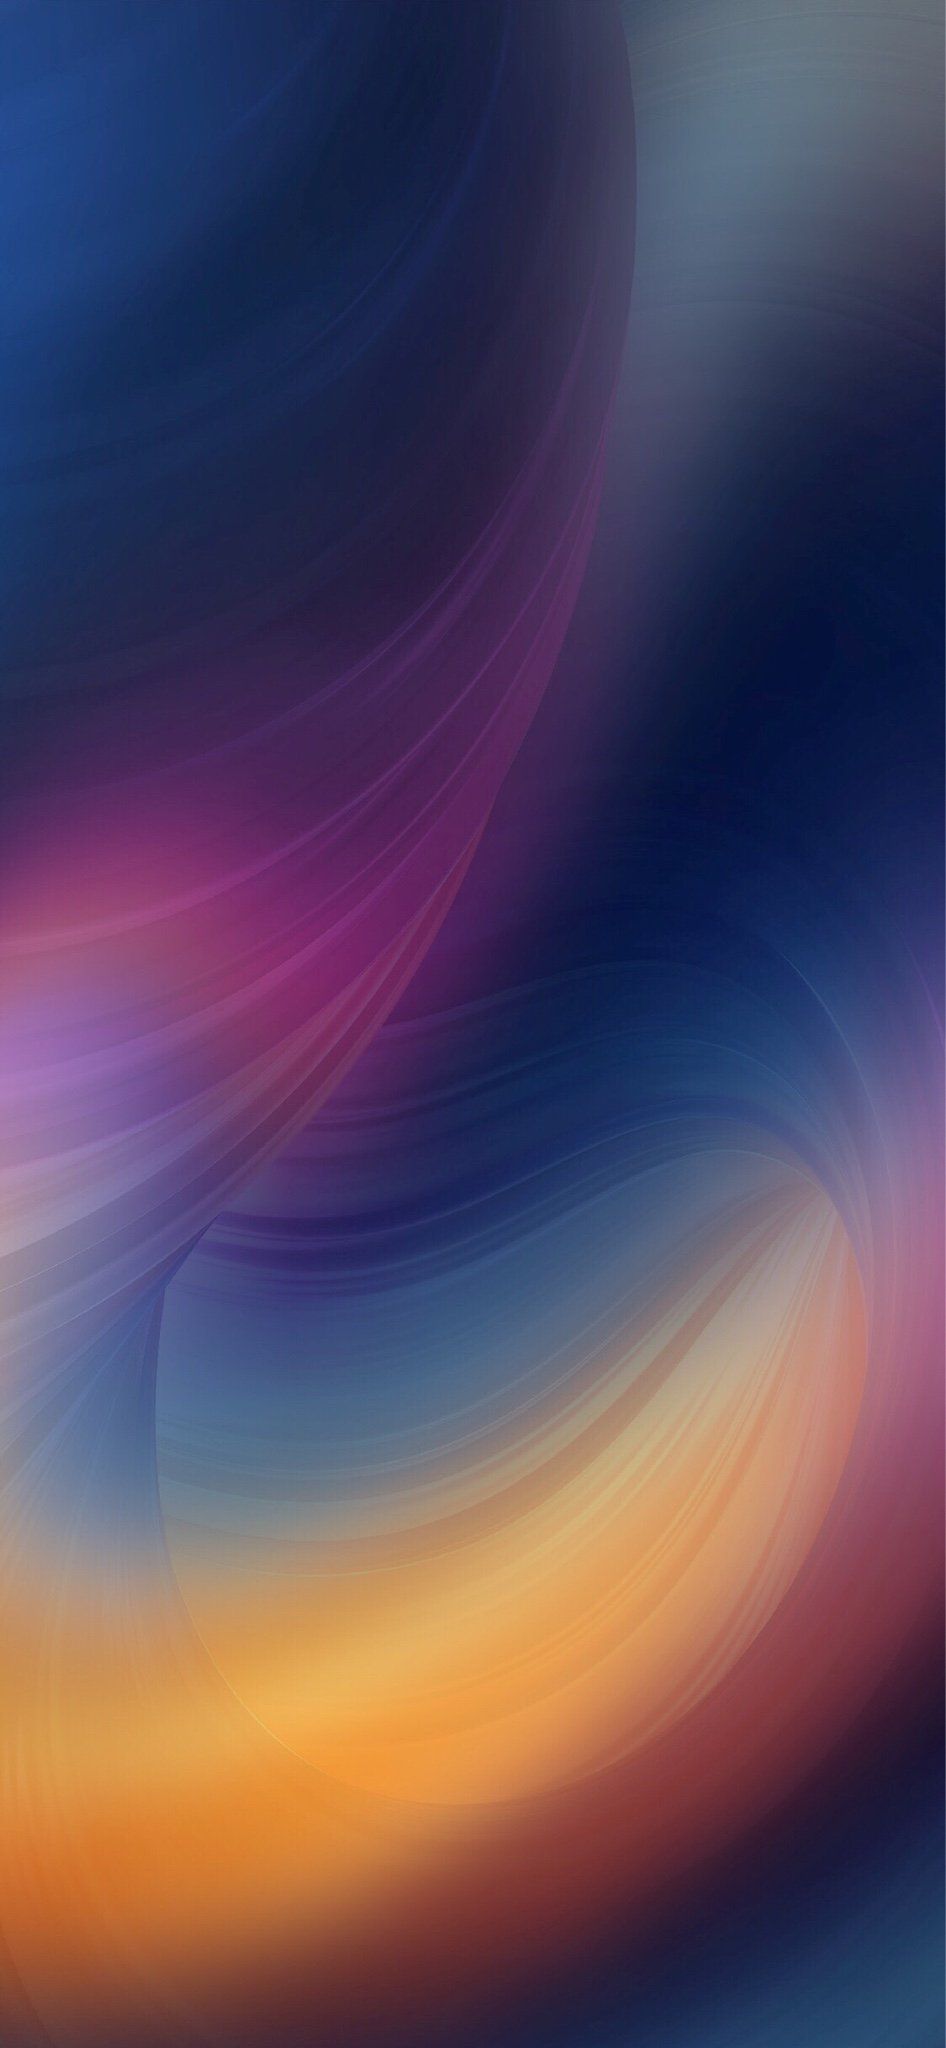 ios 10 fondo de pantalla,cielo,azul,atmósfera,púrpura,violeta